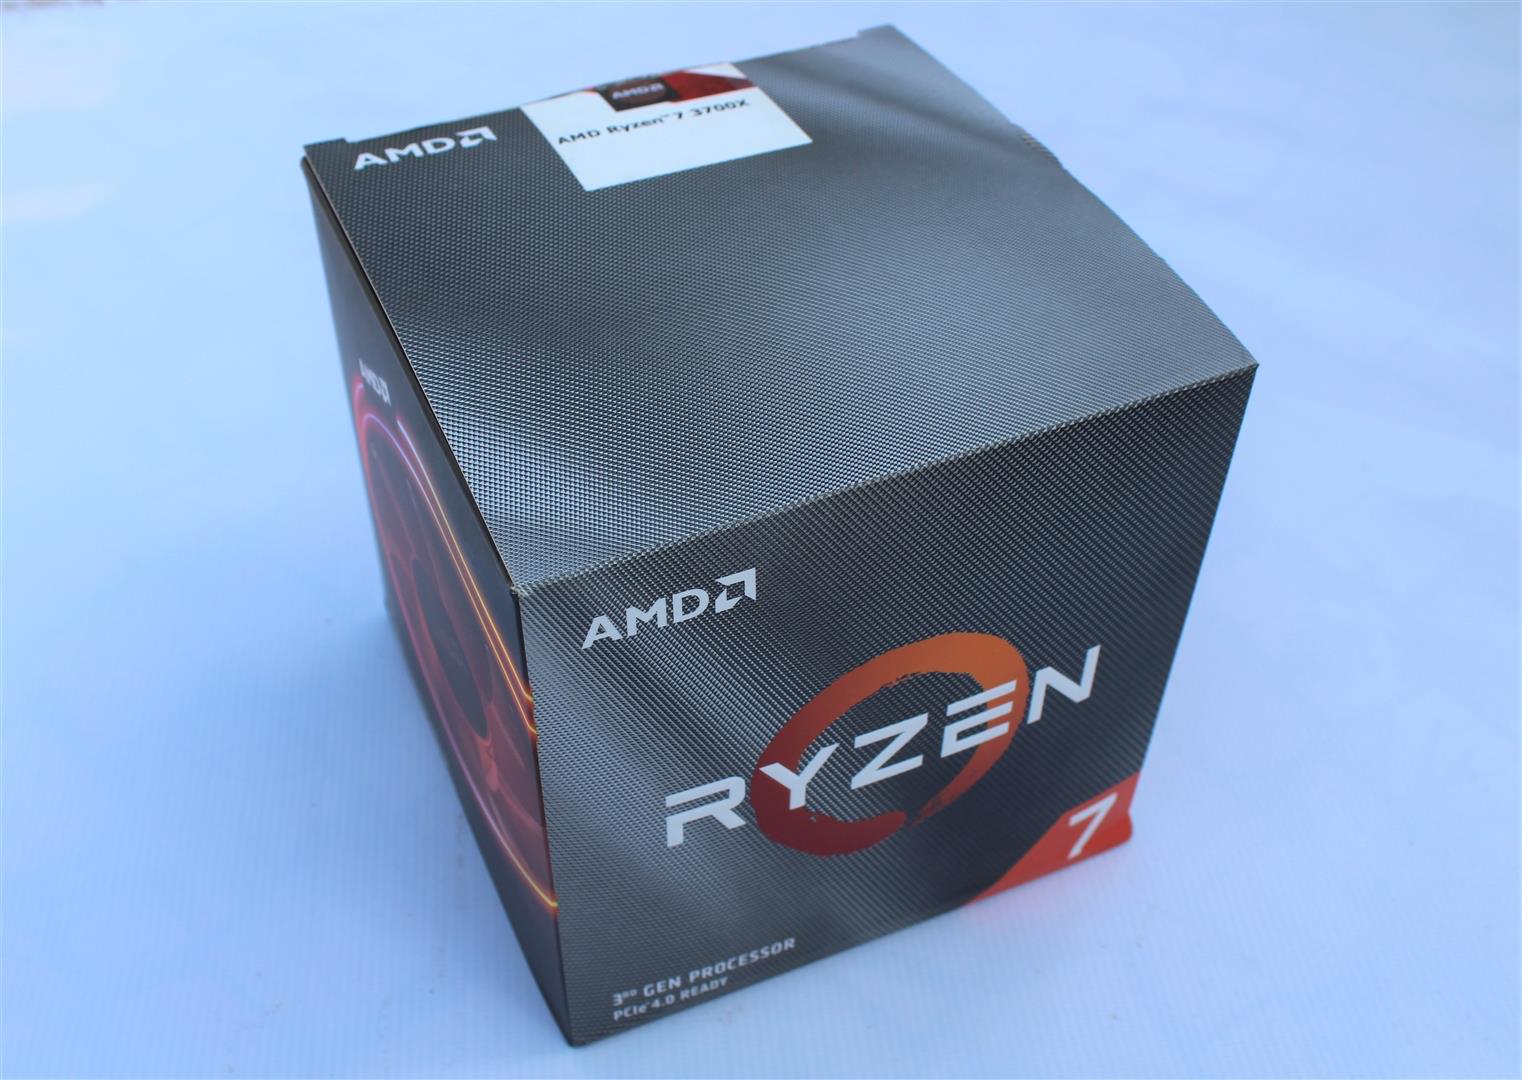 AMD Ryzen 3700X Processor Review PC TeK REVIEWS